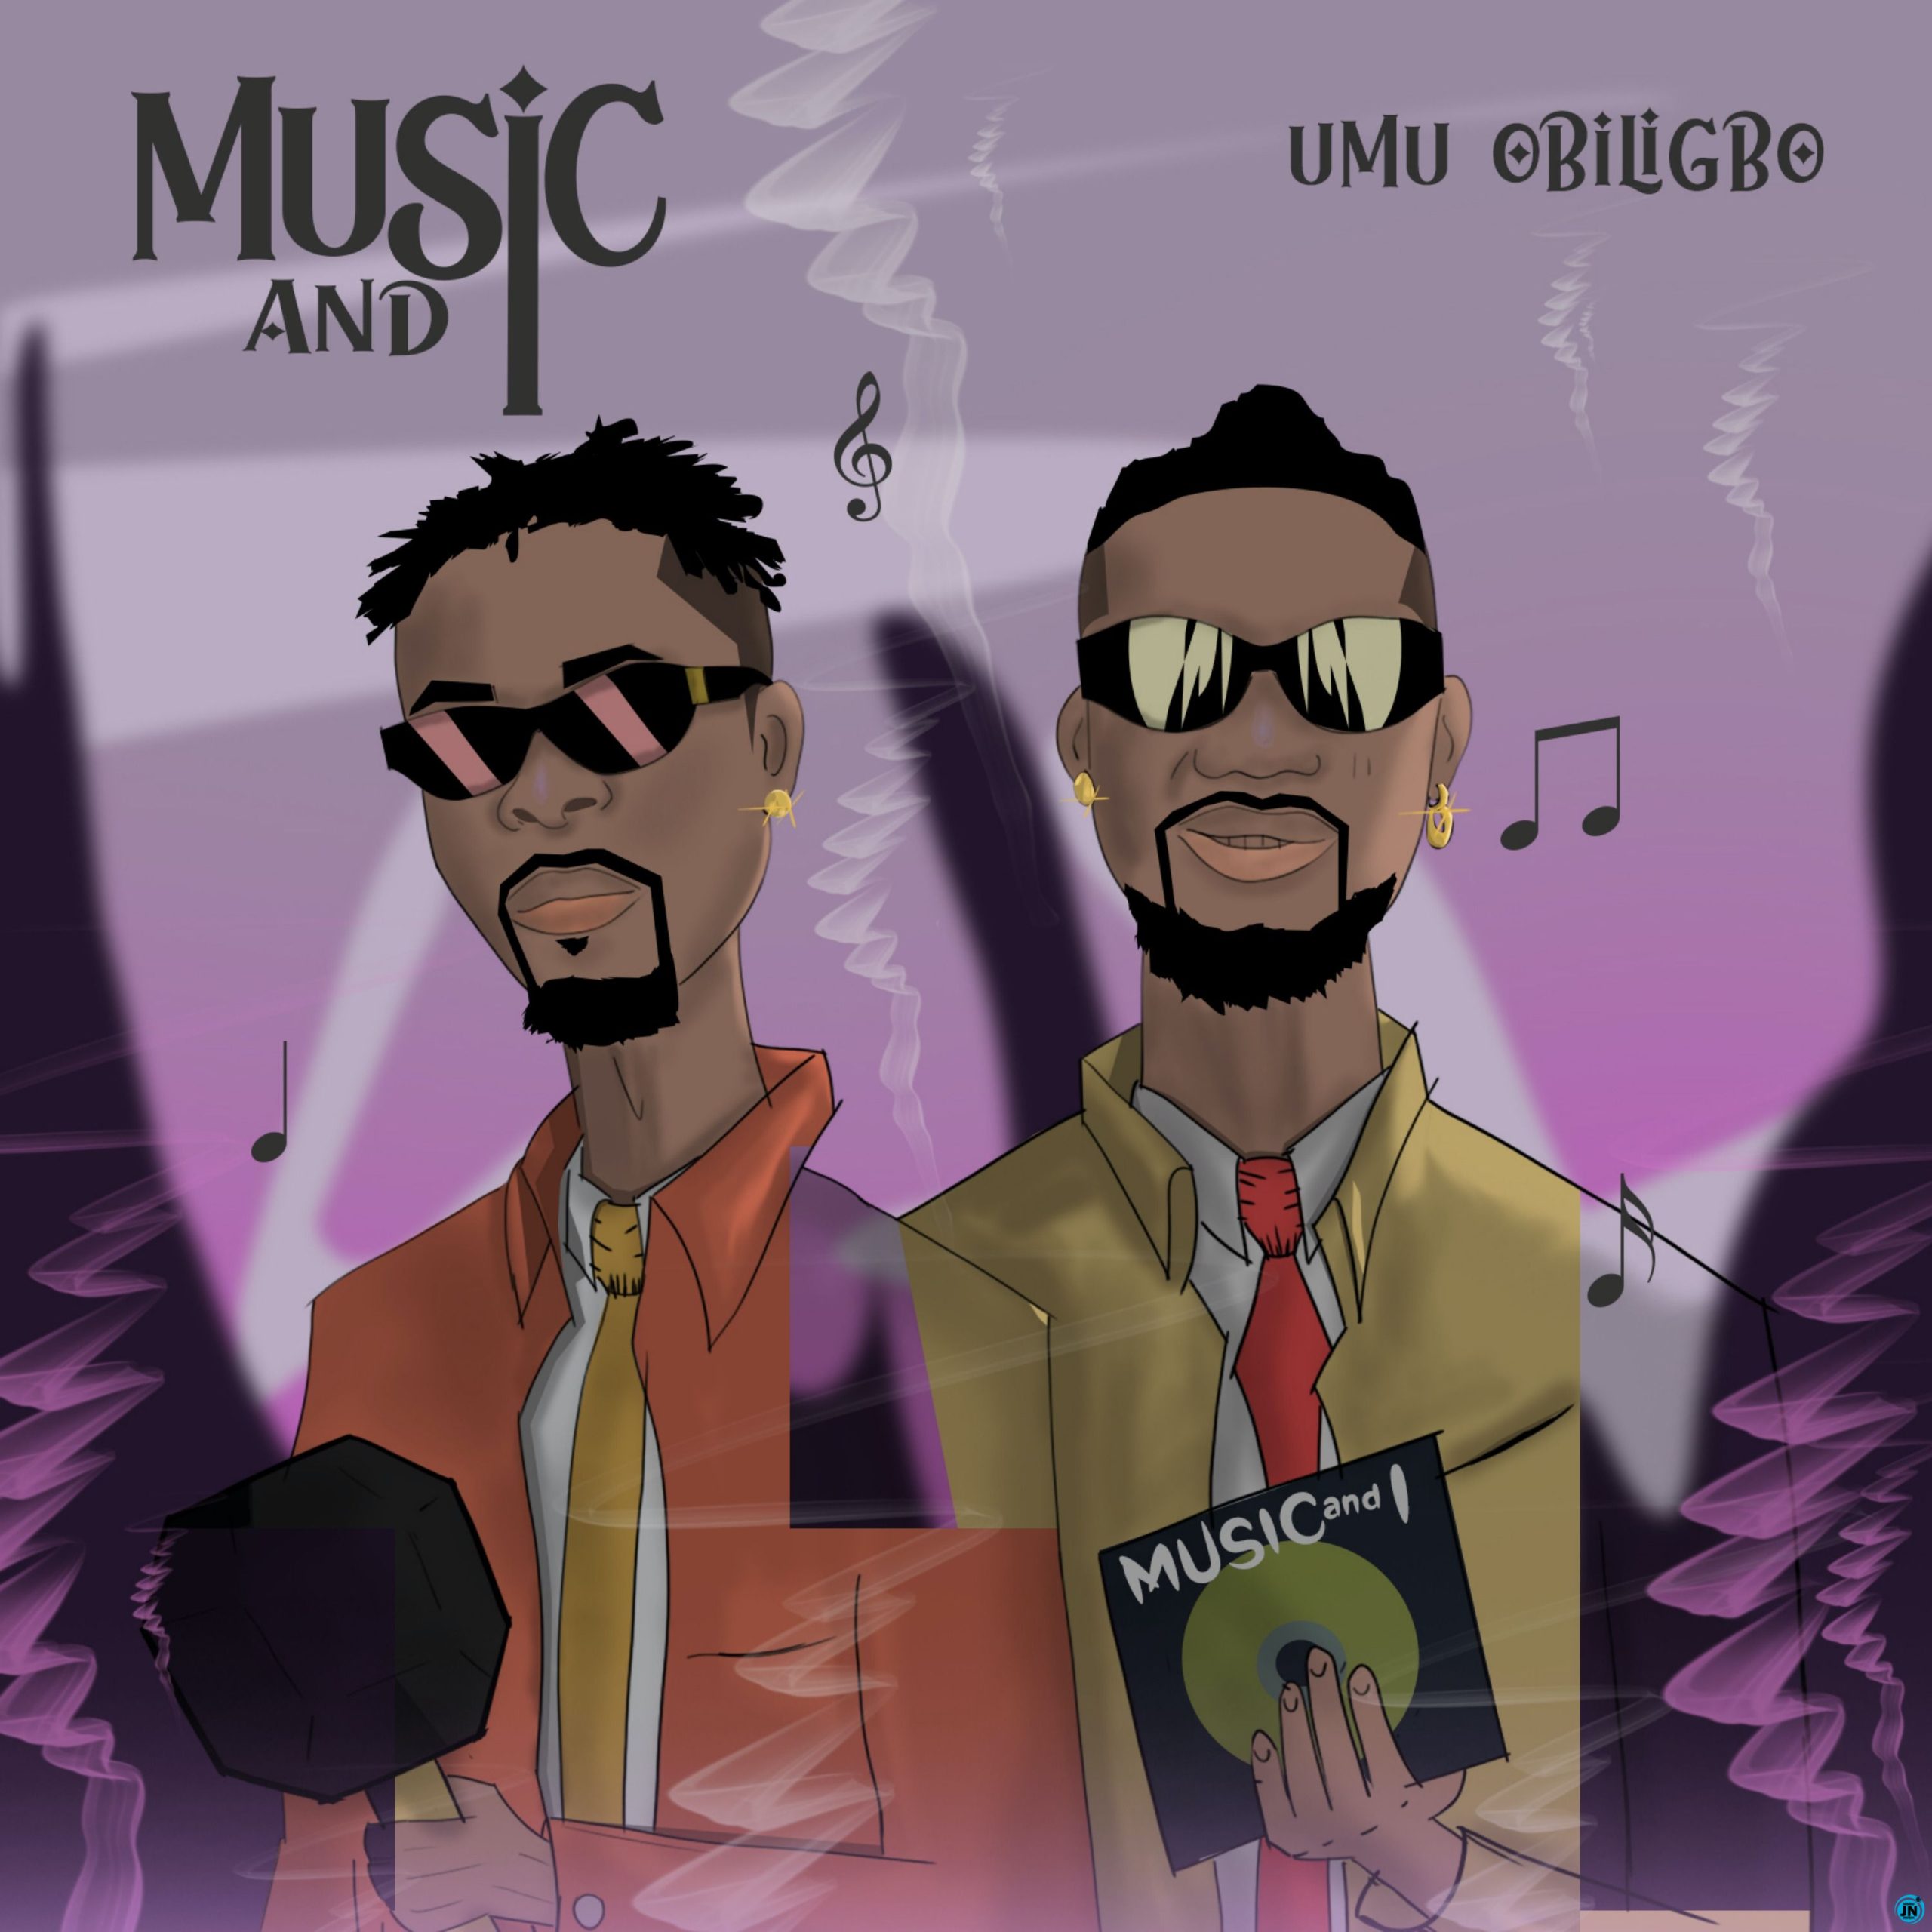 Umu Obiligbo – Work and Chop Ft. Magnito mp3 download